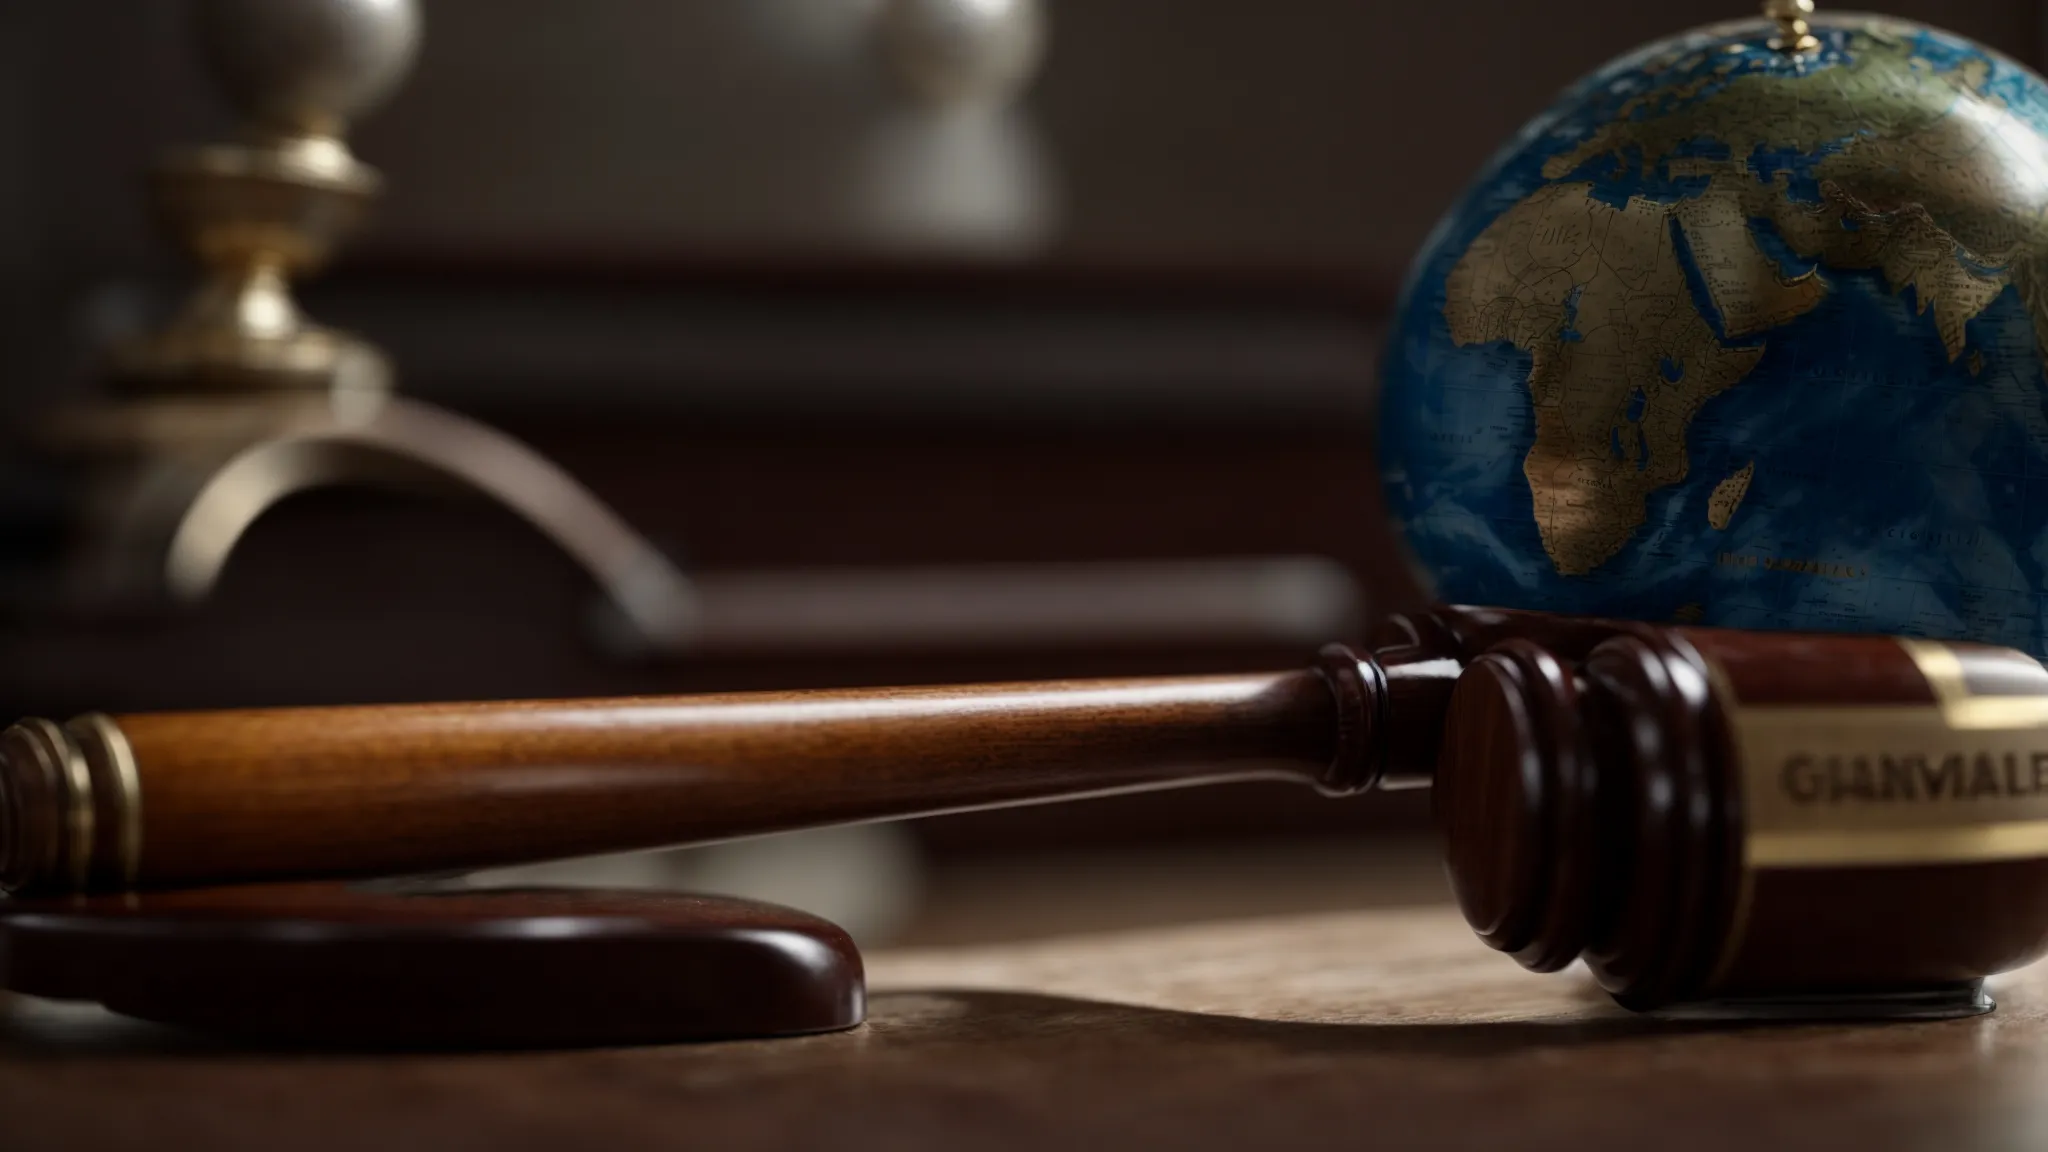 a gavel resting beside a globe, symbolizing international arbitration and the balance of power.